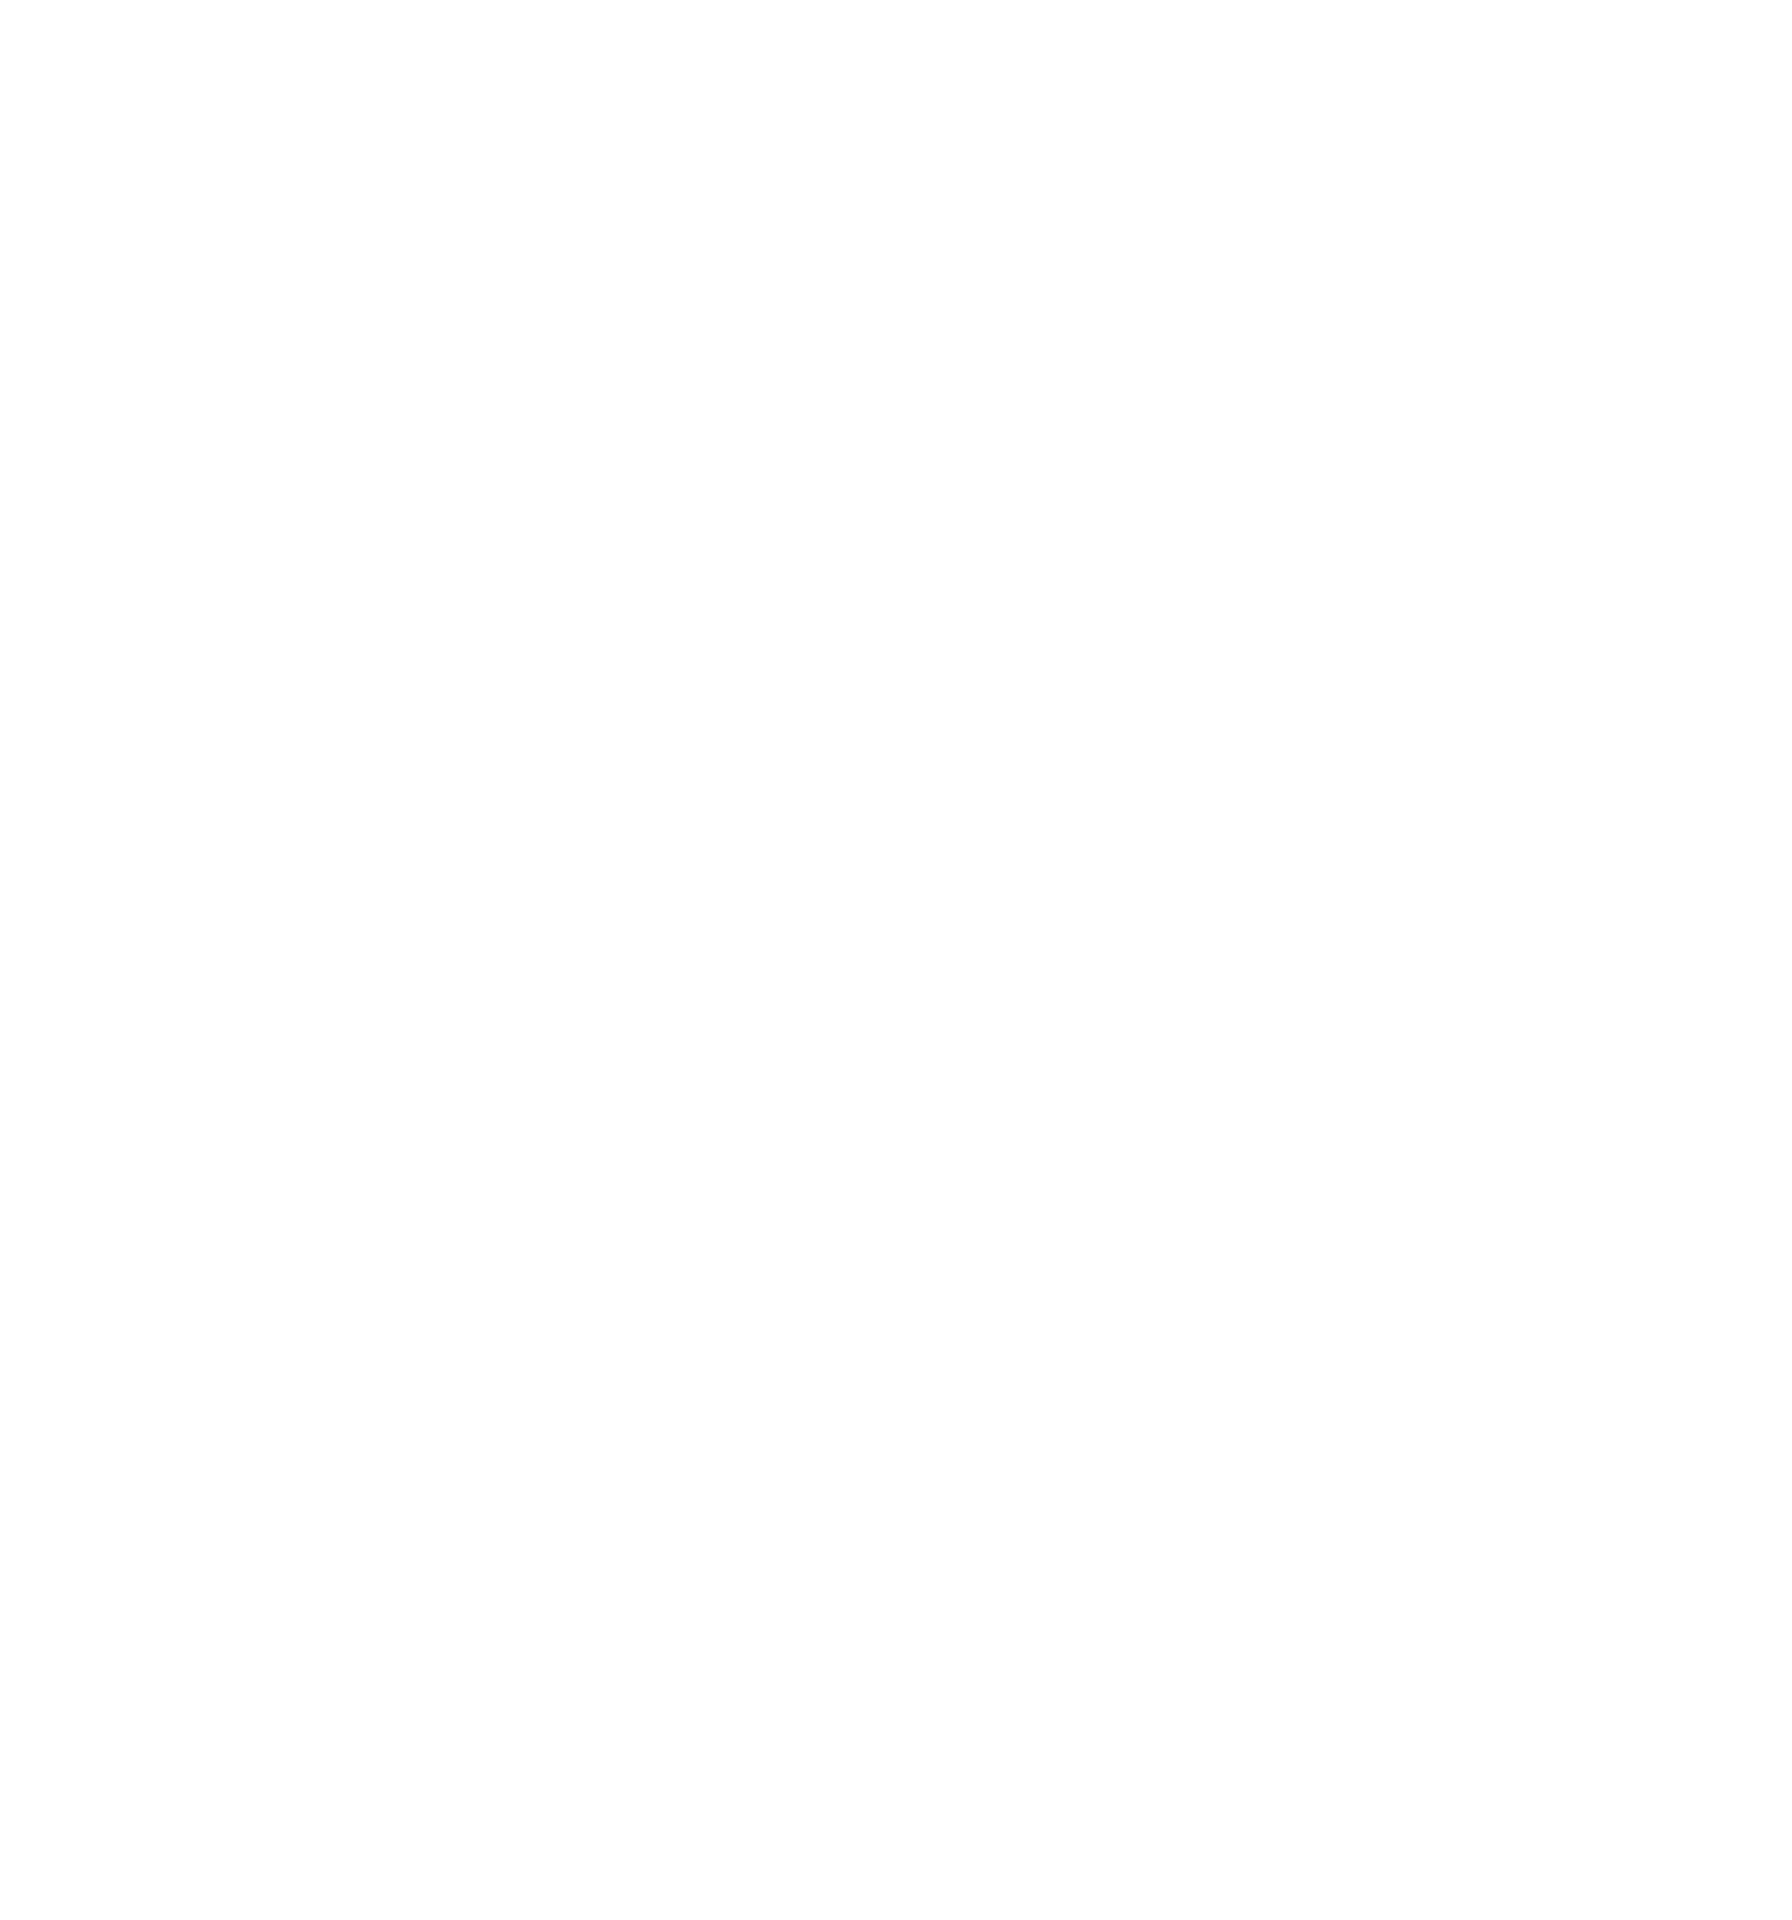 ABLX Trade